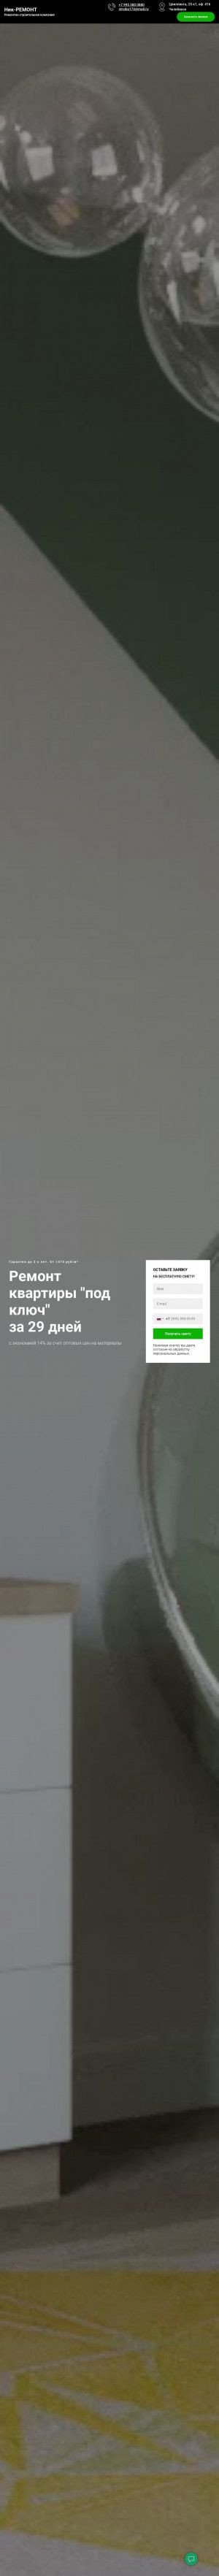 Предпросмотр для stroika174.ru — Ник-РЕМОНТ